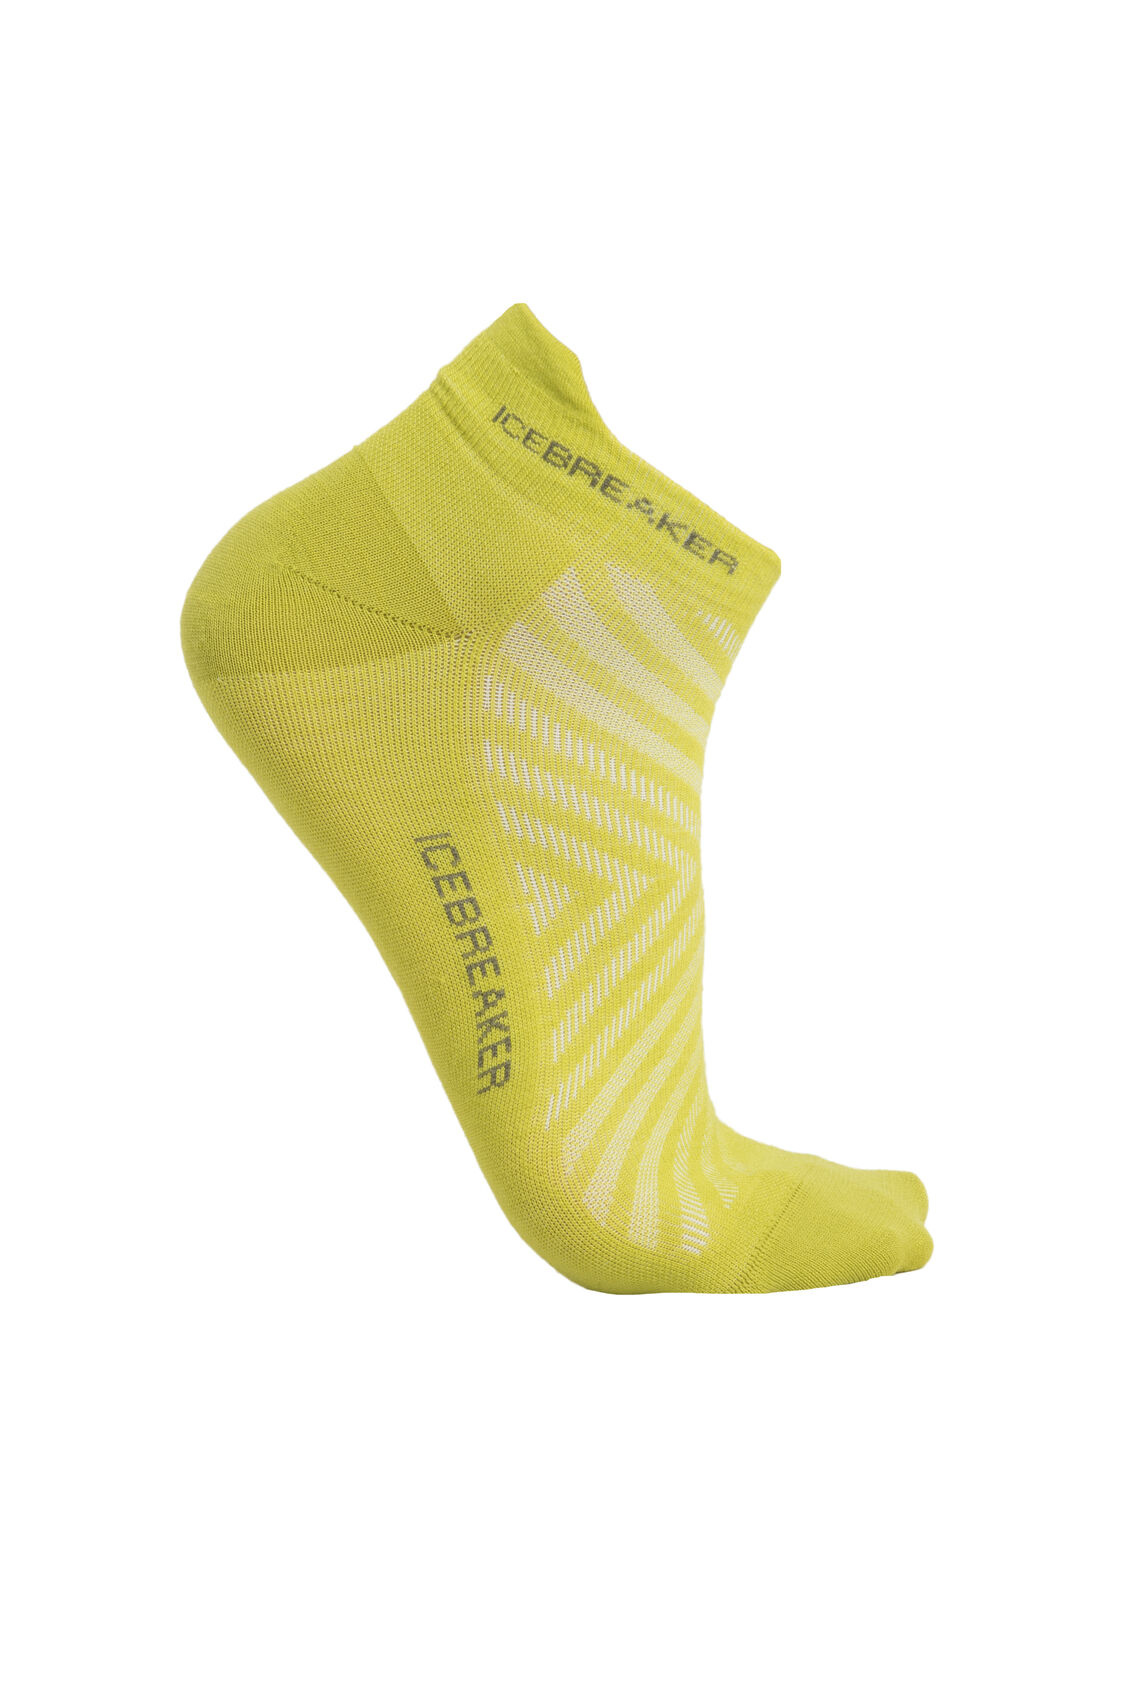 Men's Merino Run+ Ultralight Micro Socks